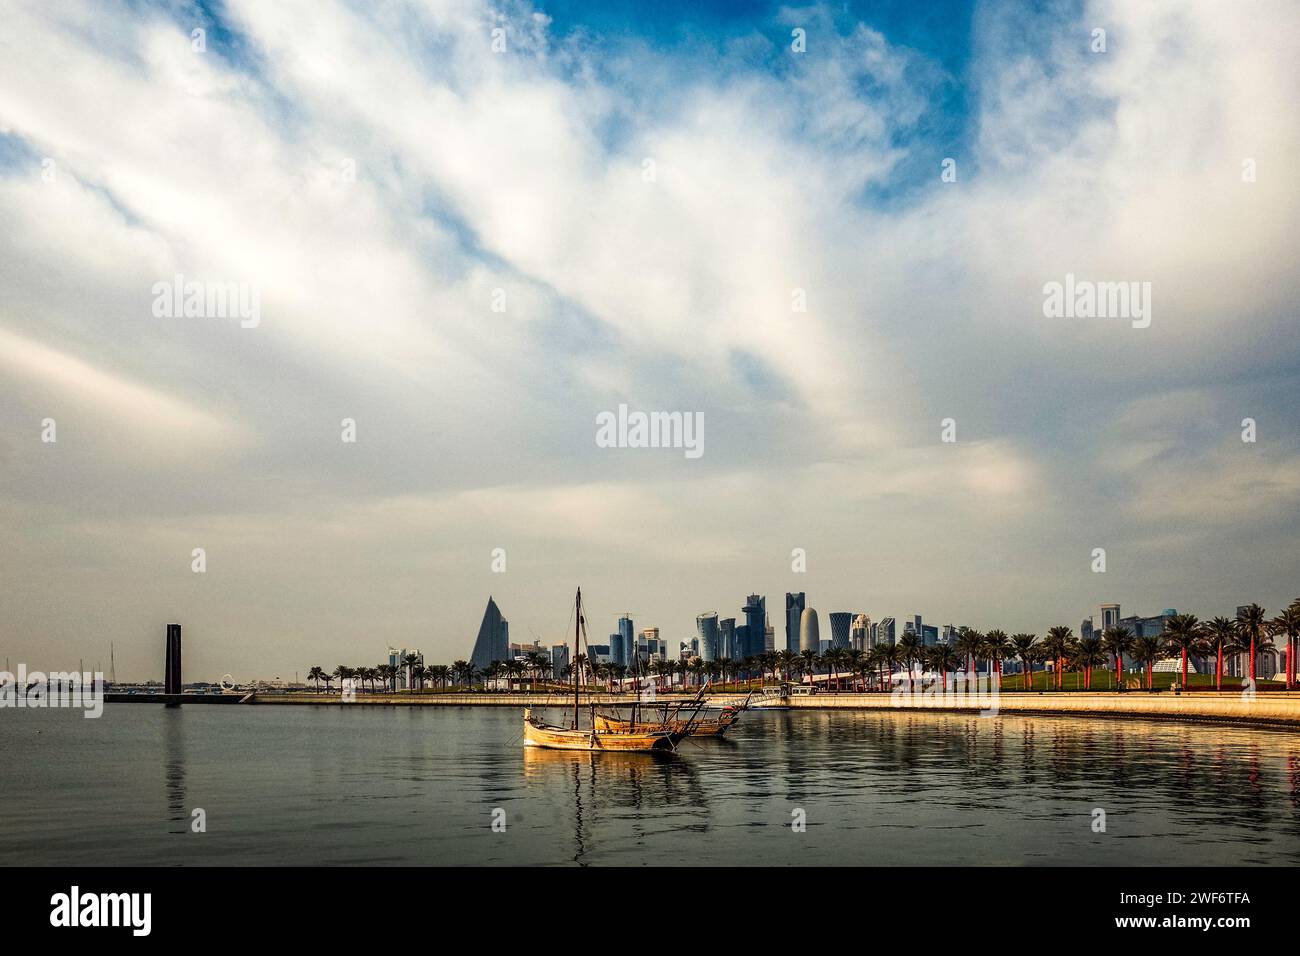 An areal view of Doha Qatar. City scene along the Arabian Sea Stock Photo